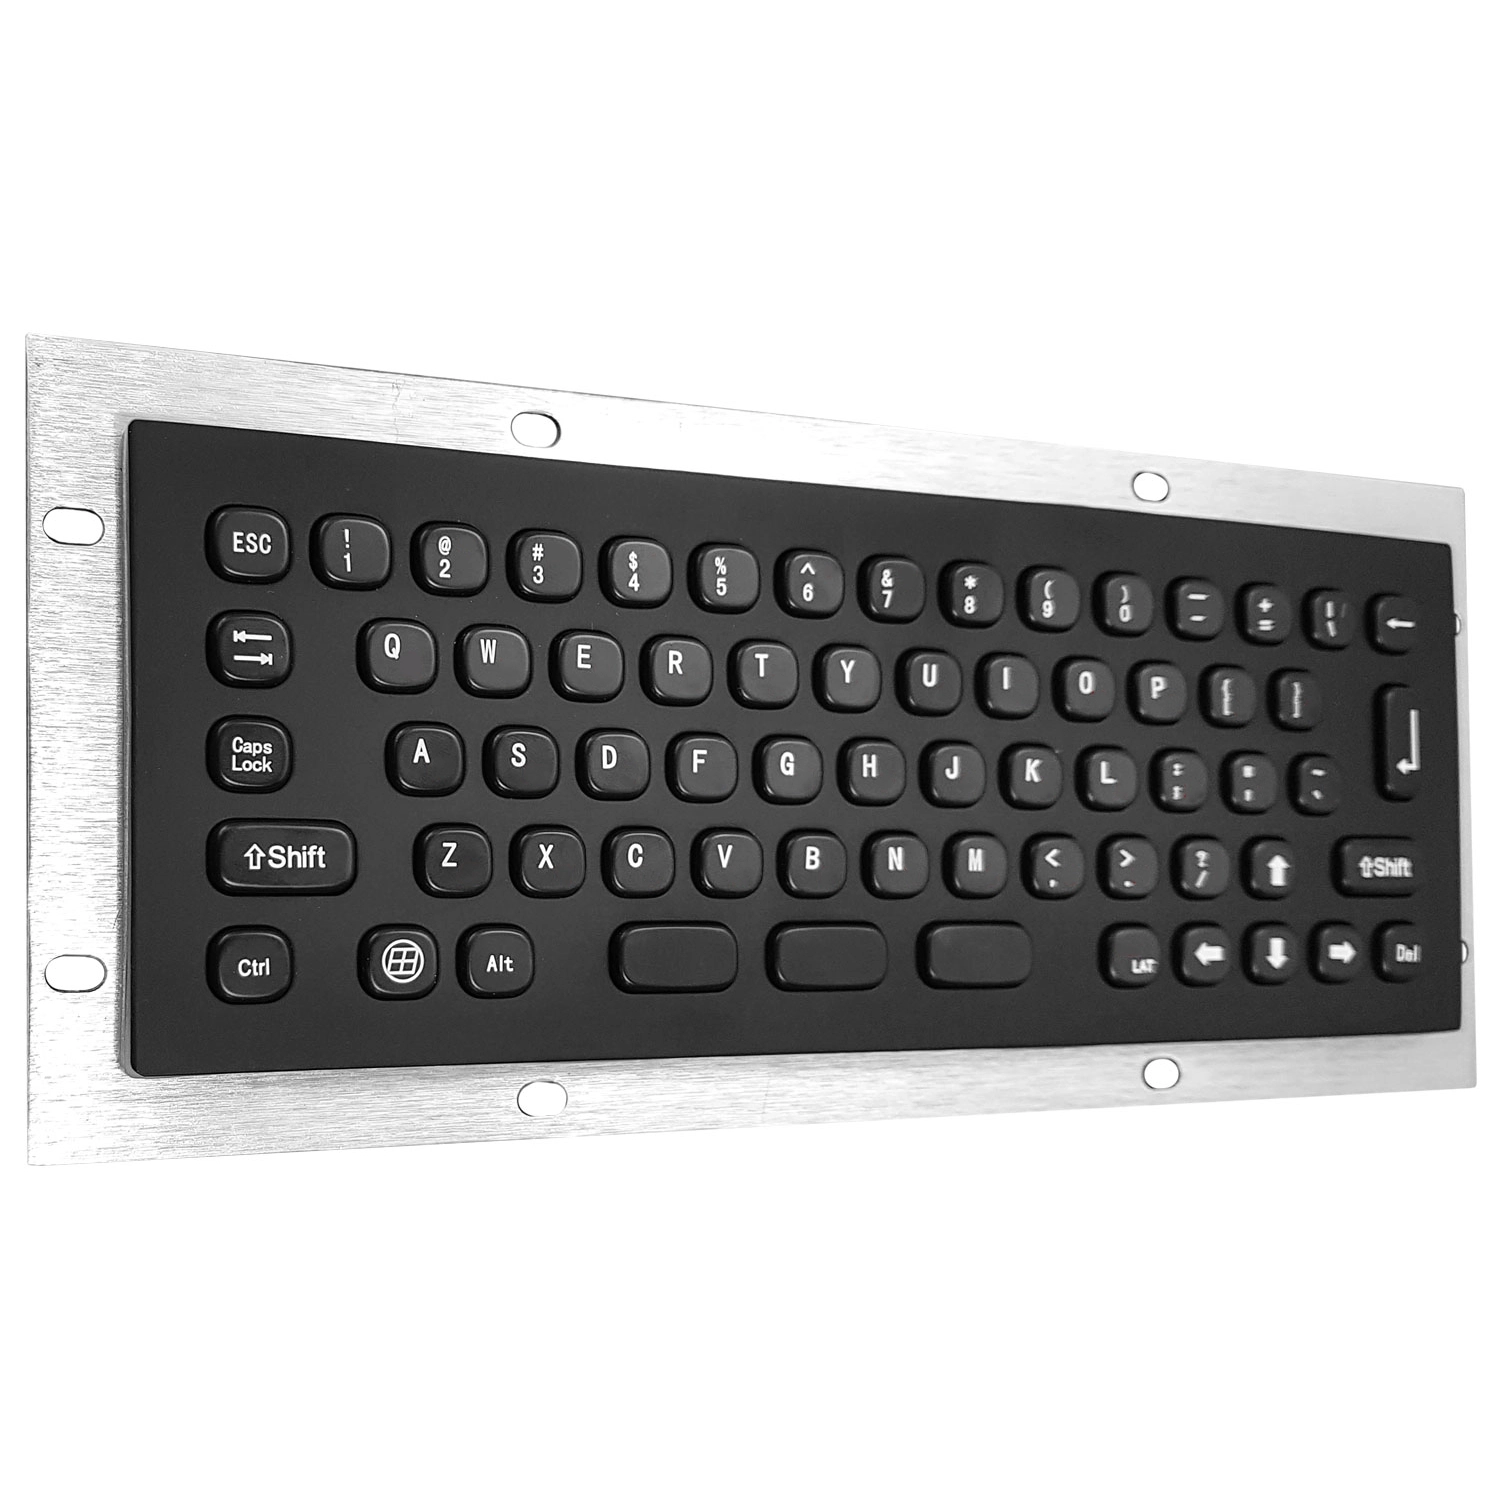 Rugged panel mount keyboard KB-000-NW0S002